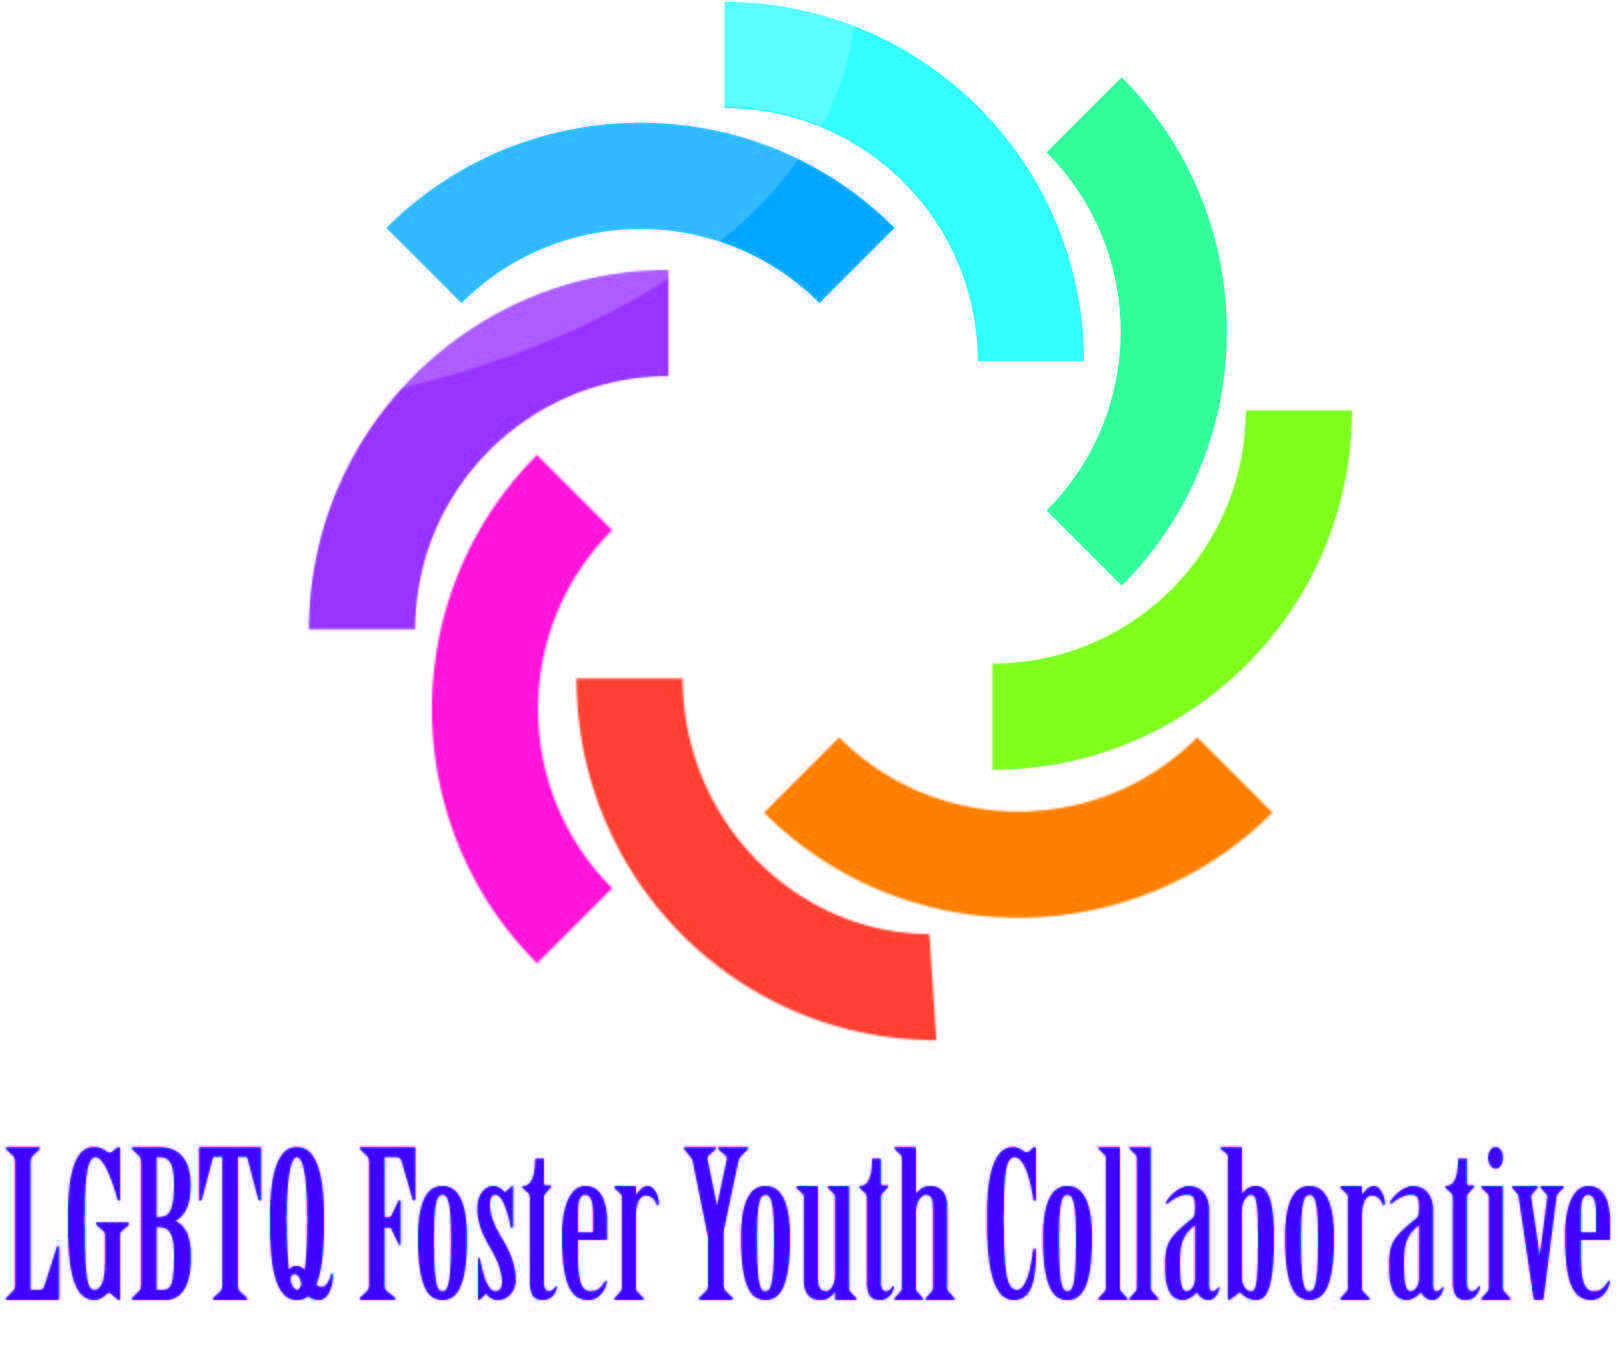 LGBTQ Logo - LGBTQ Foster Youth Collaborative – Sierra Forever Families